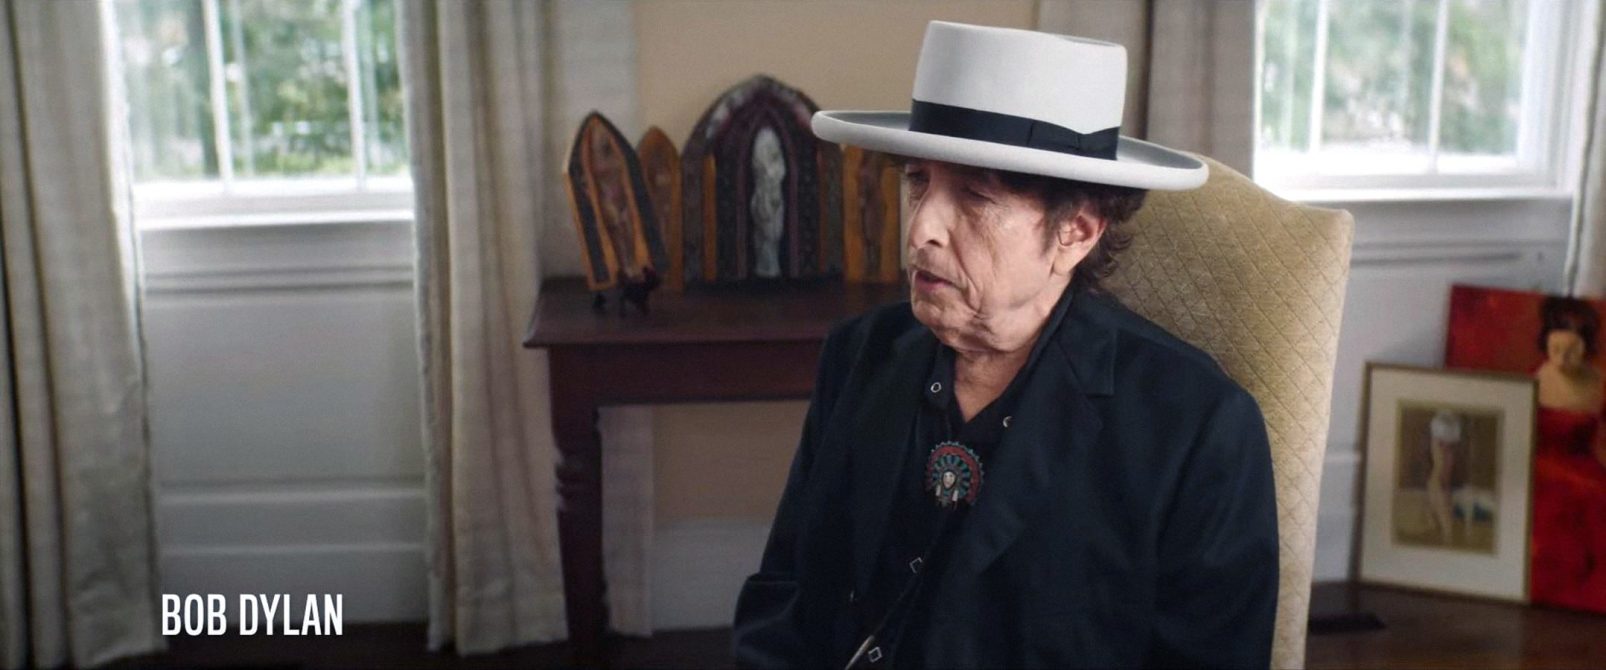 Bob Dylan's response